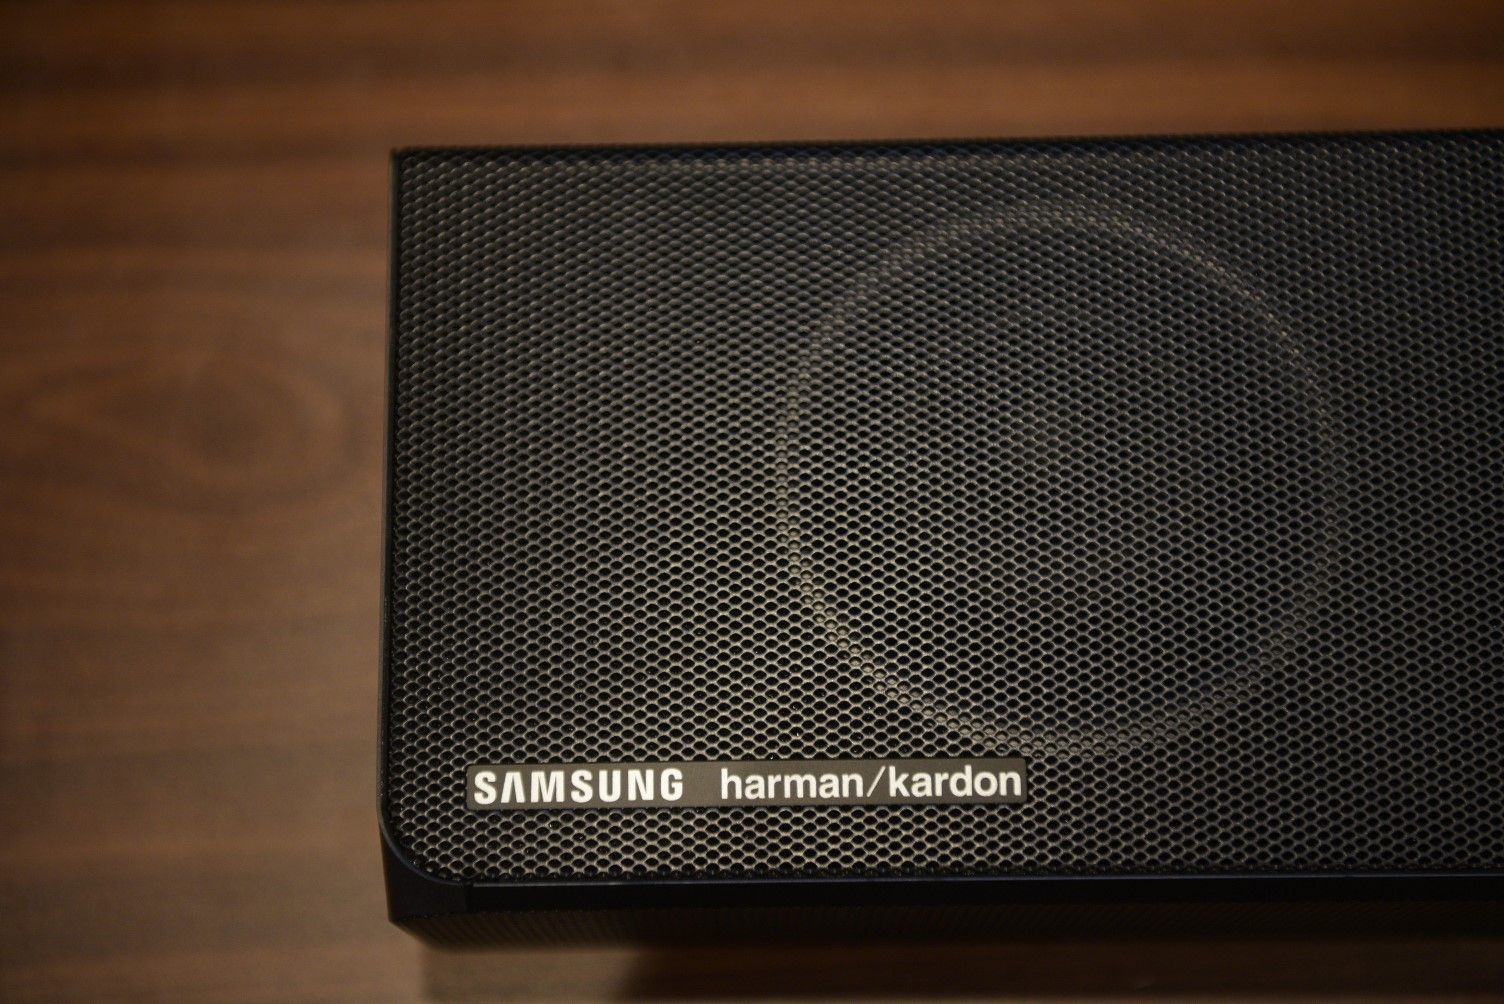 Samsung Harman Kardon Soundbar HW-N950, lini premium terbaru dari Samsung Soundbar.